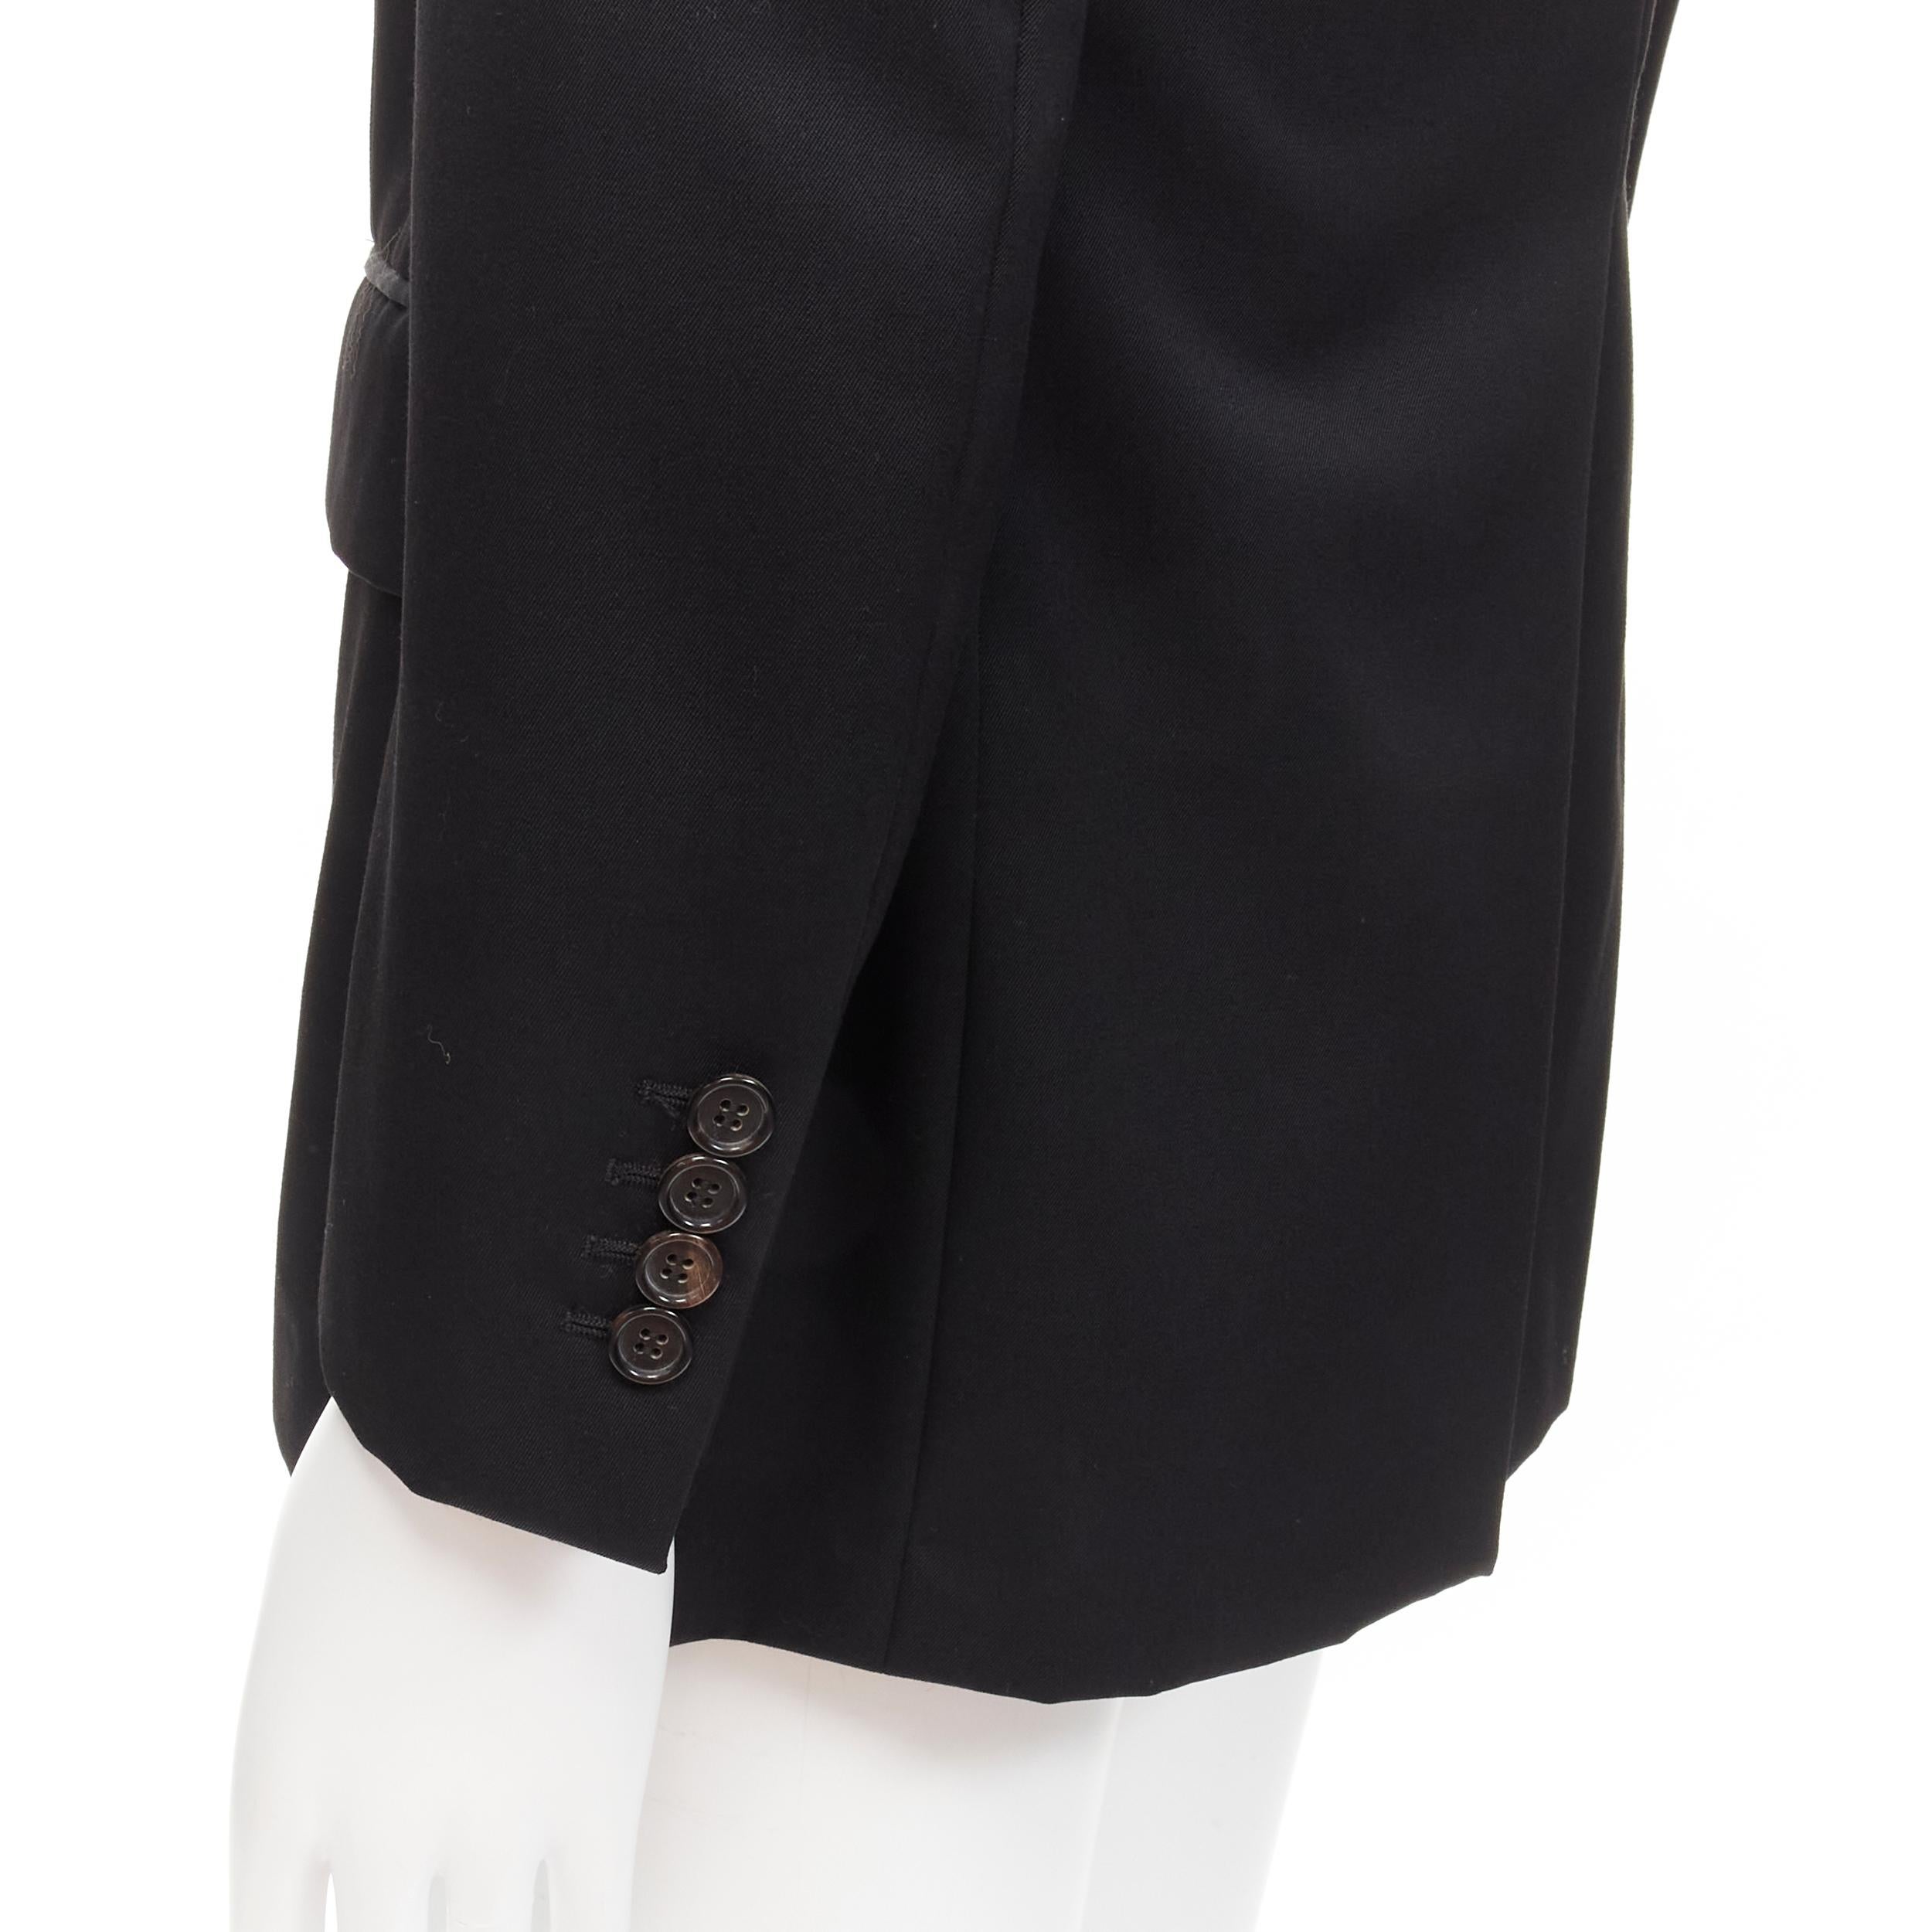 DIOR HOMME Hedi Slimane leather collar classic 2-button blazer jacket FR46 S For Sale 5